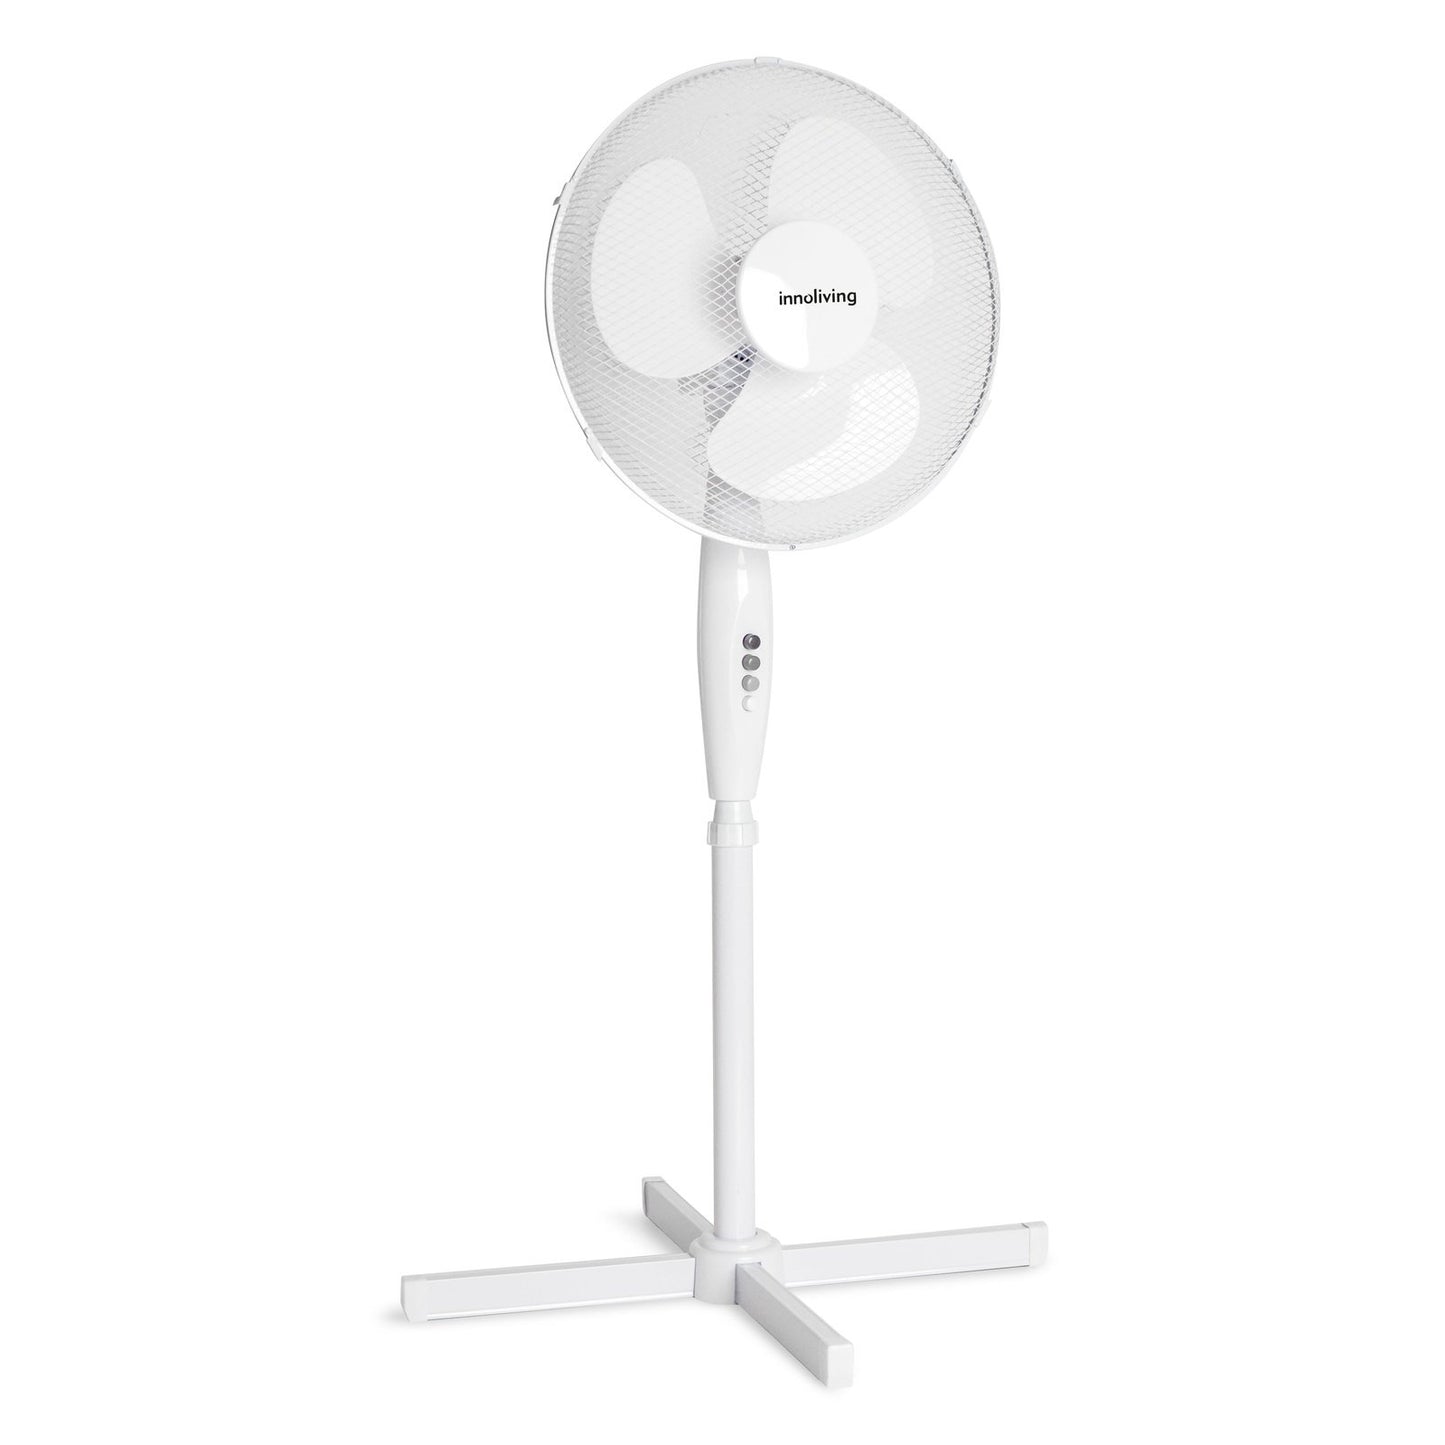 Floor fan with pedestal 40cm INN-503 Innoliving